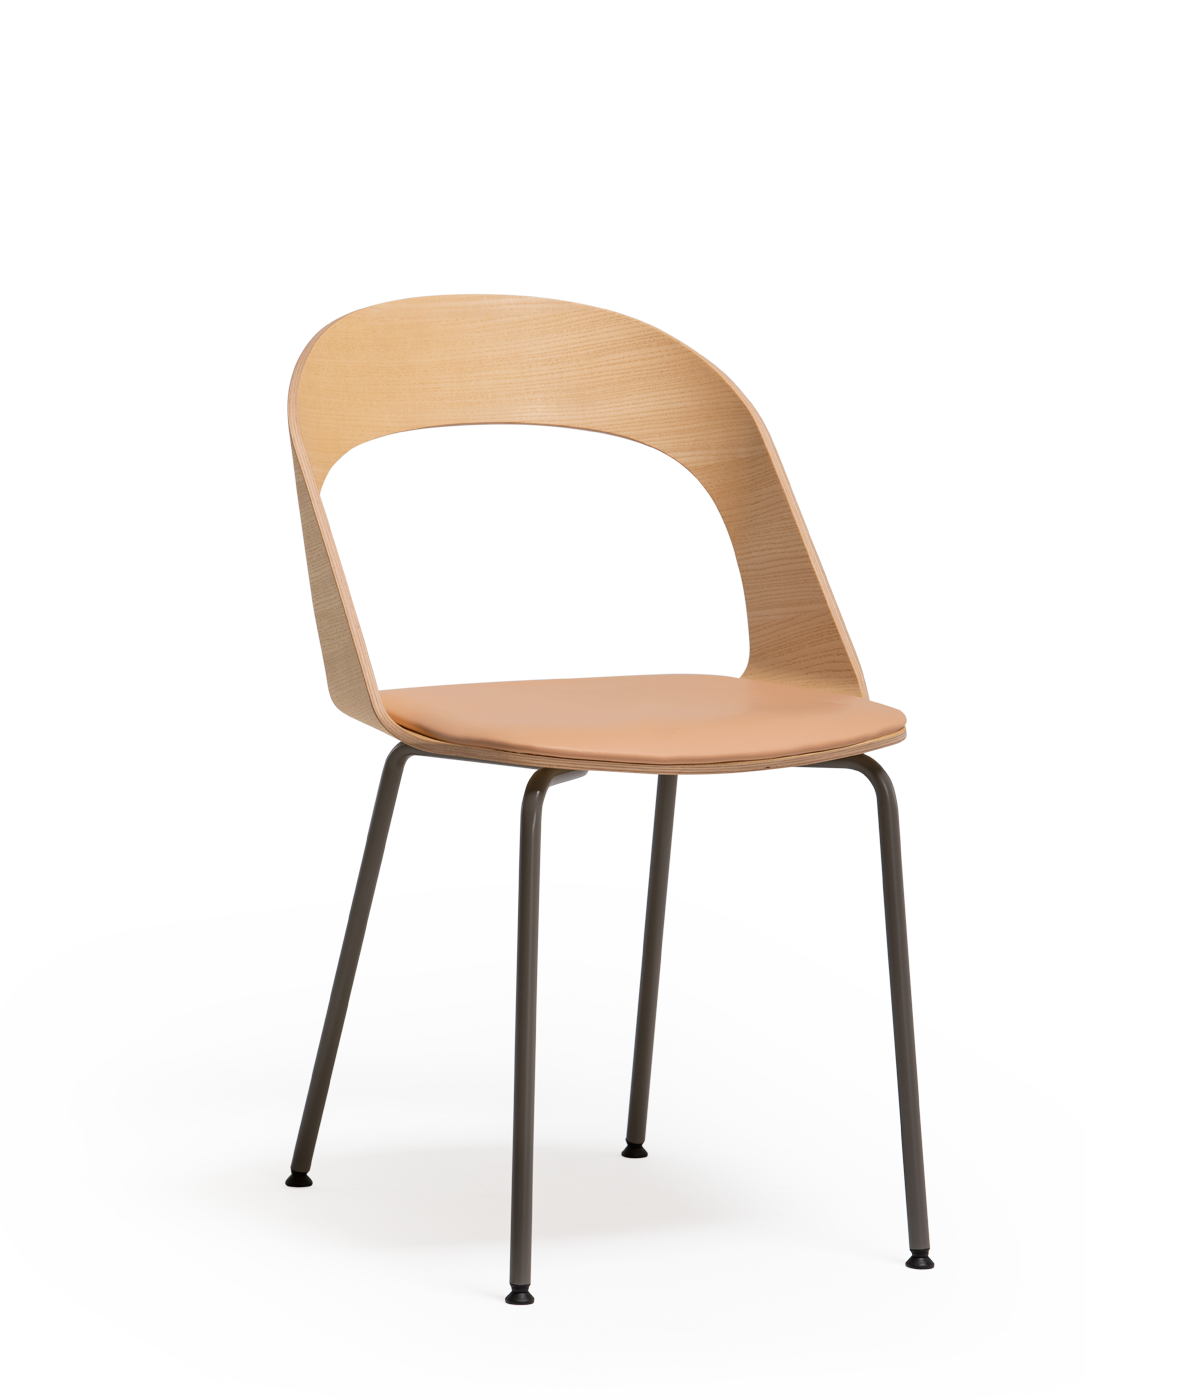 Goose chair Model D with metallic legs - Vergés